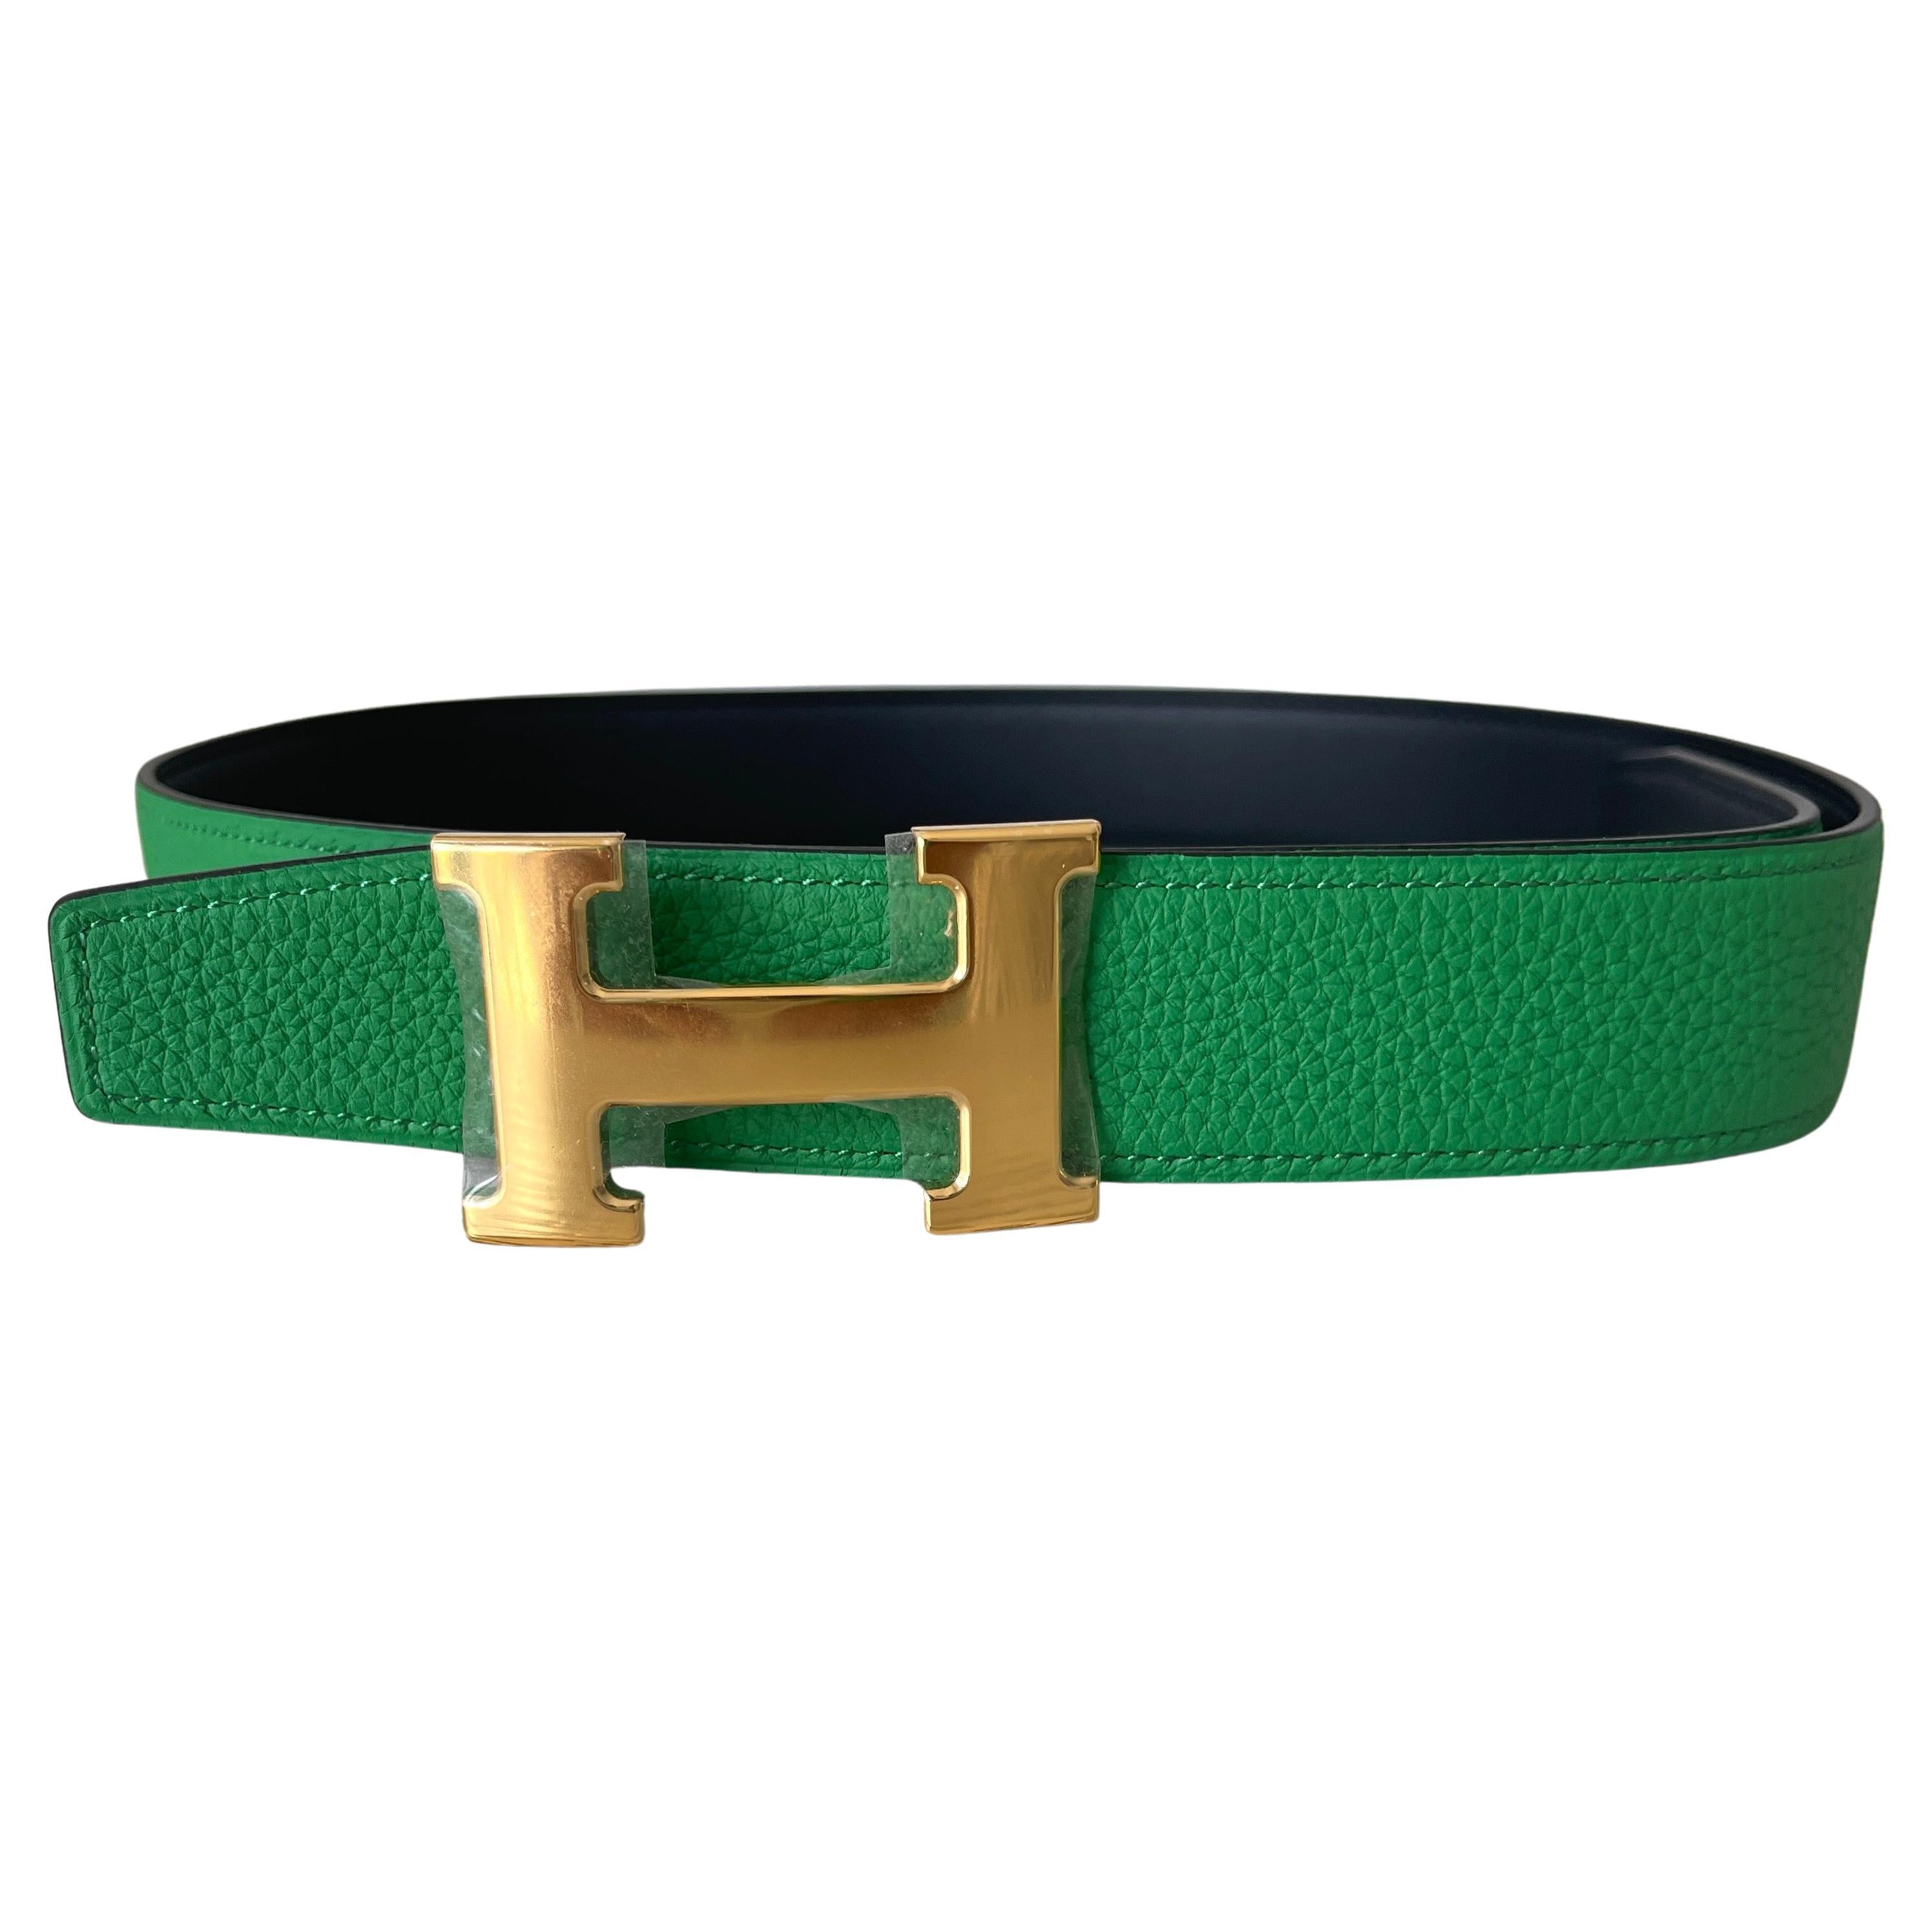 Hermes Constance Gold H belt buckle Reversible Bamboo Black leather strap 32 mm